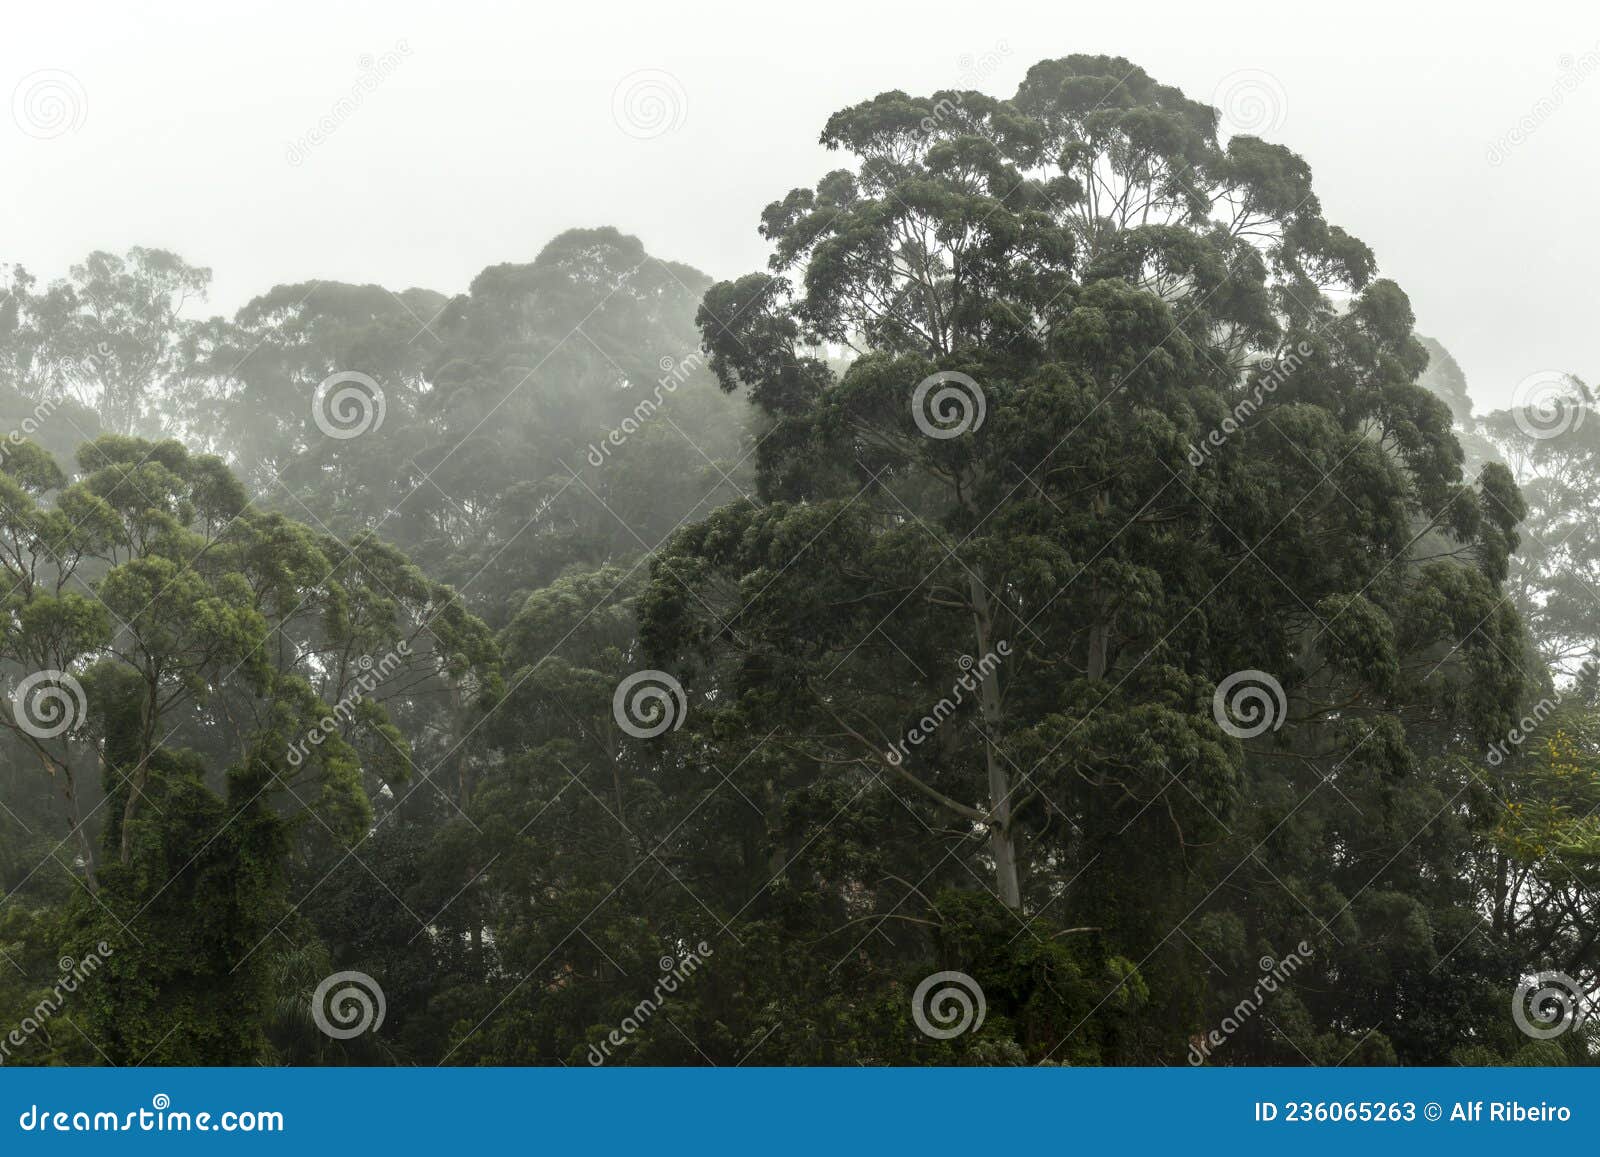 misty jungle in mata atlantica atlantic rainforest biome